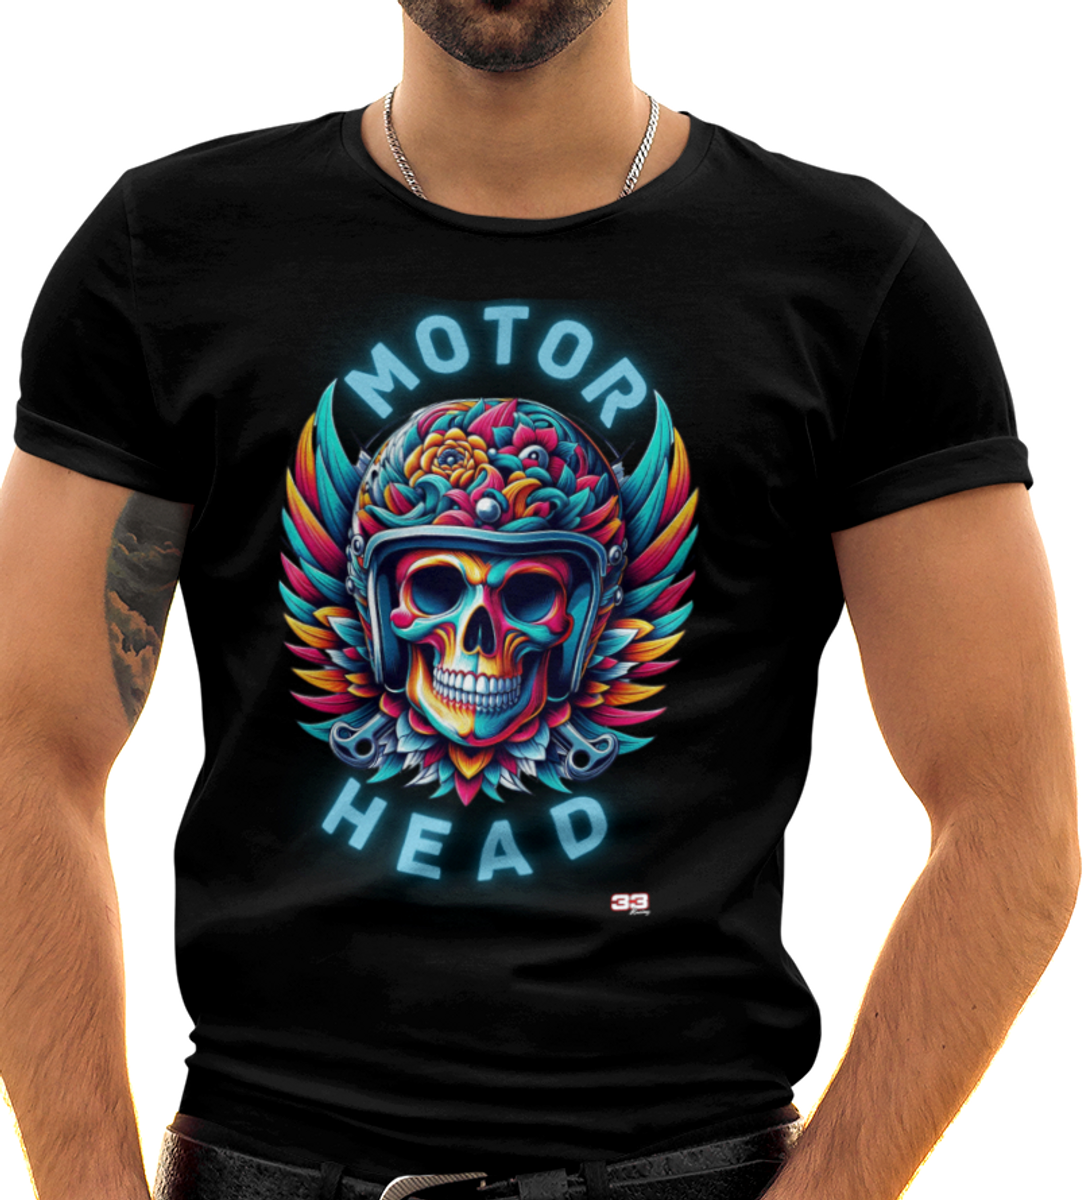 Nome do produto: Motor Head Skull